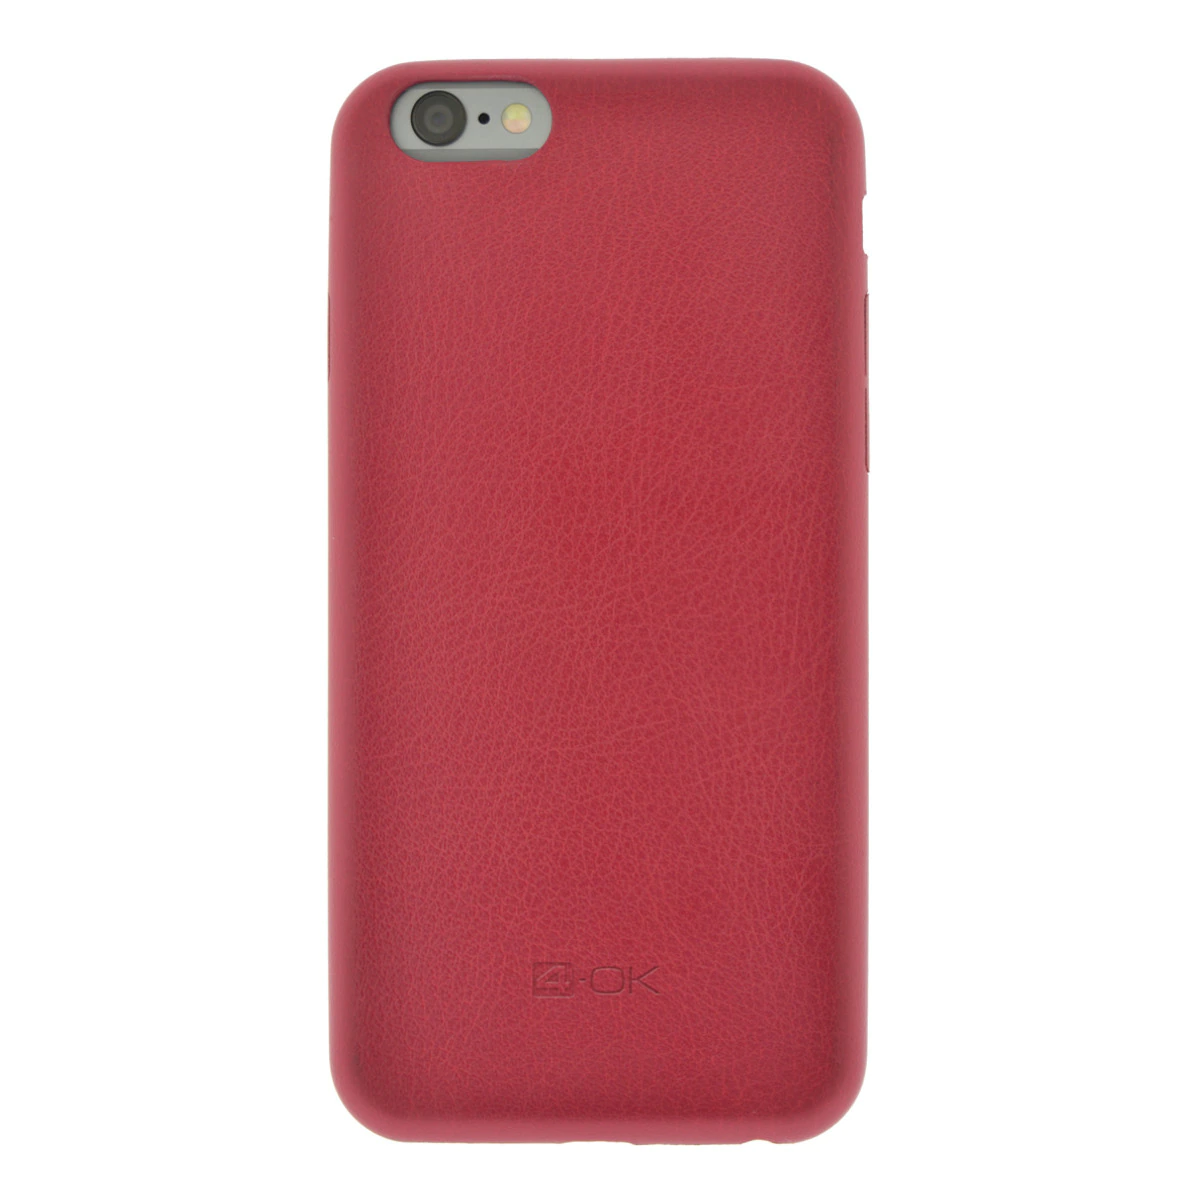 Carcasa 4-OK Second Skin para iPhone 6/ 6s Rosa